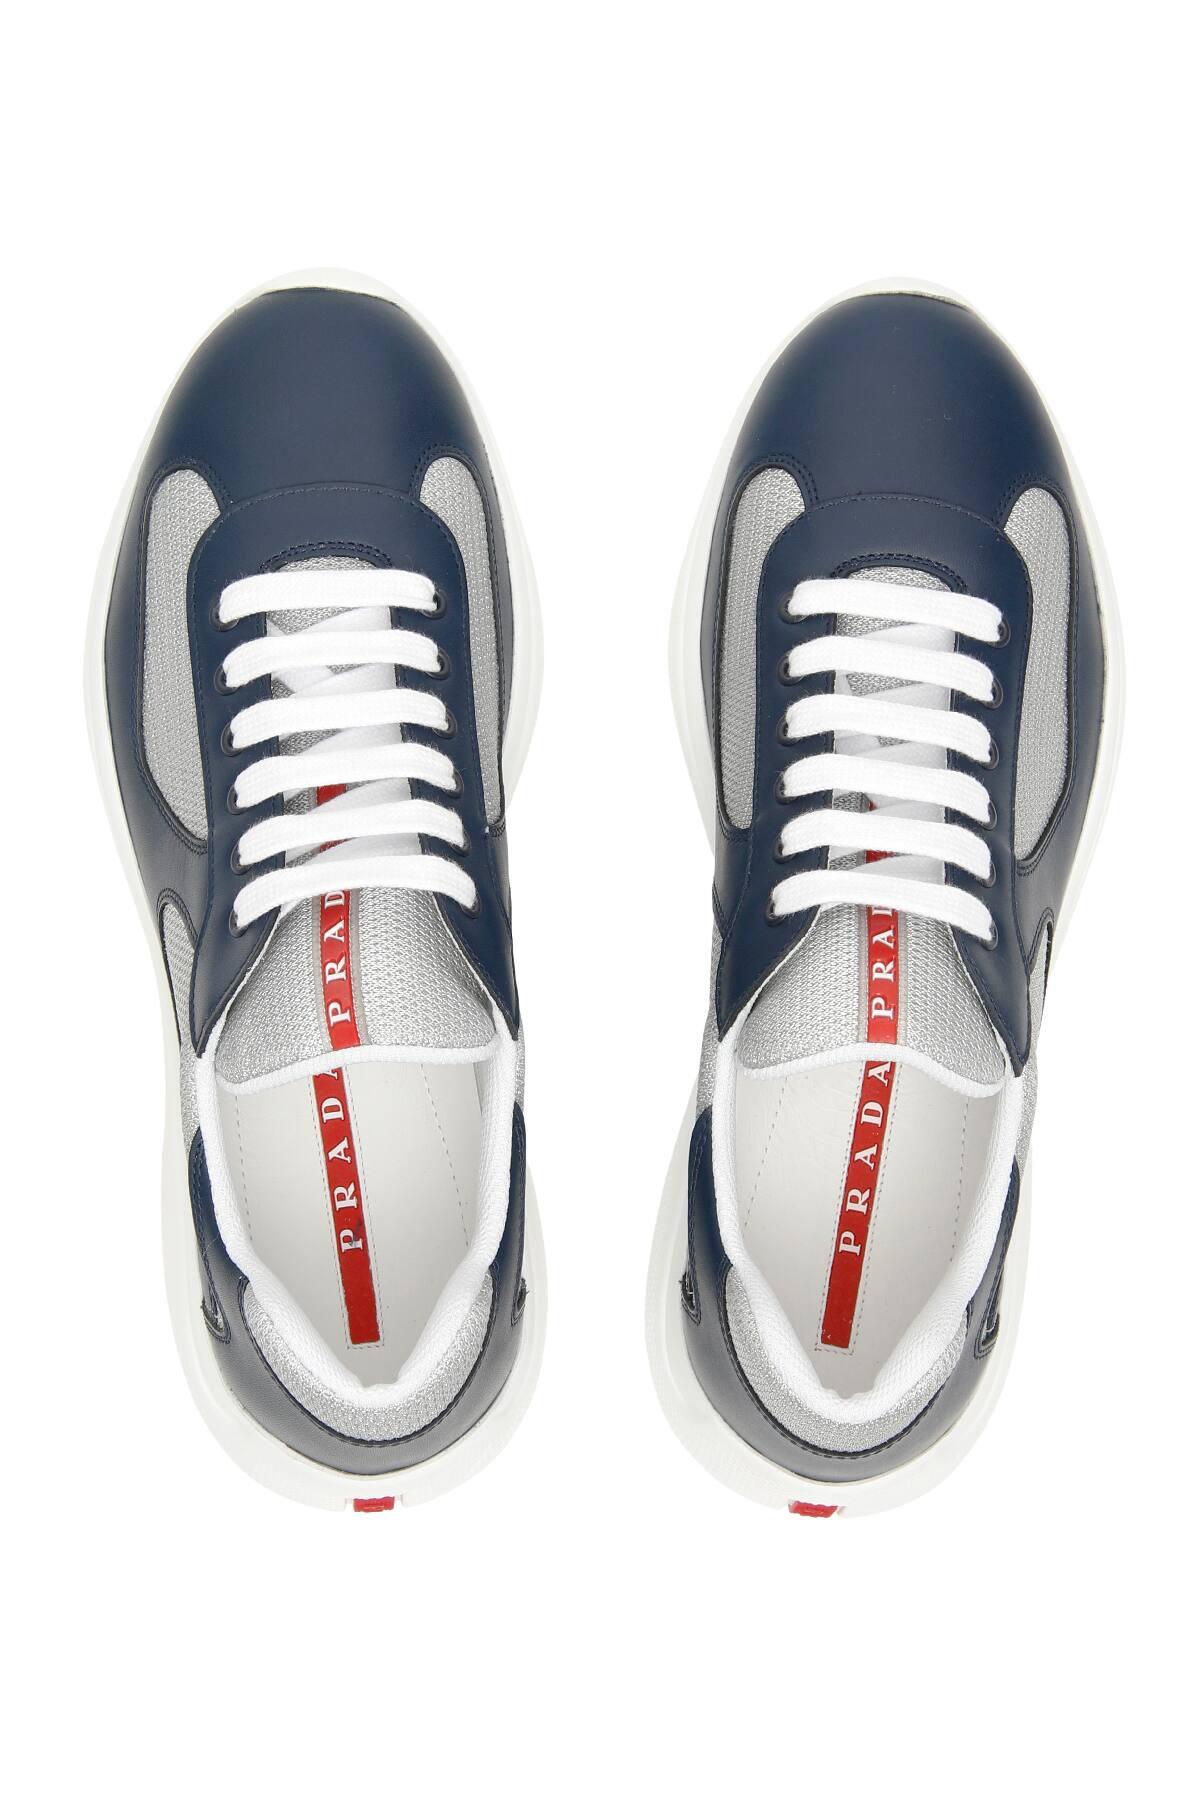 Prada Americas Cup Metallic Paneled Leather Sneakers in Blue,White ...